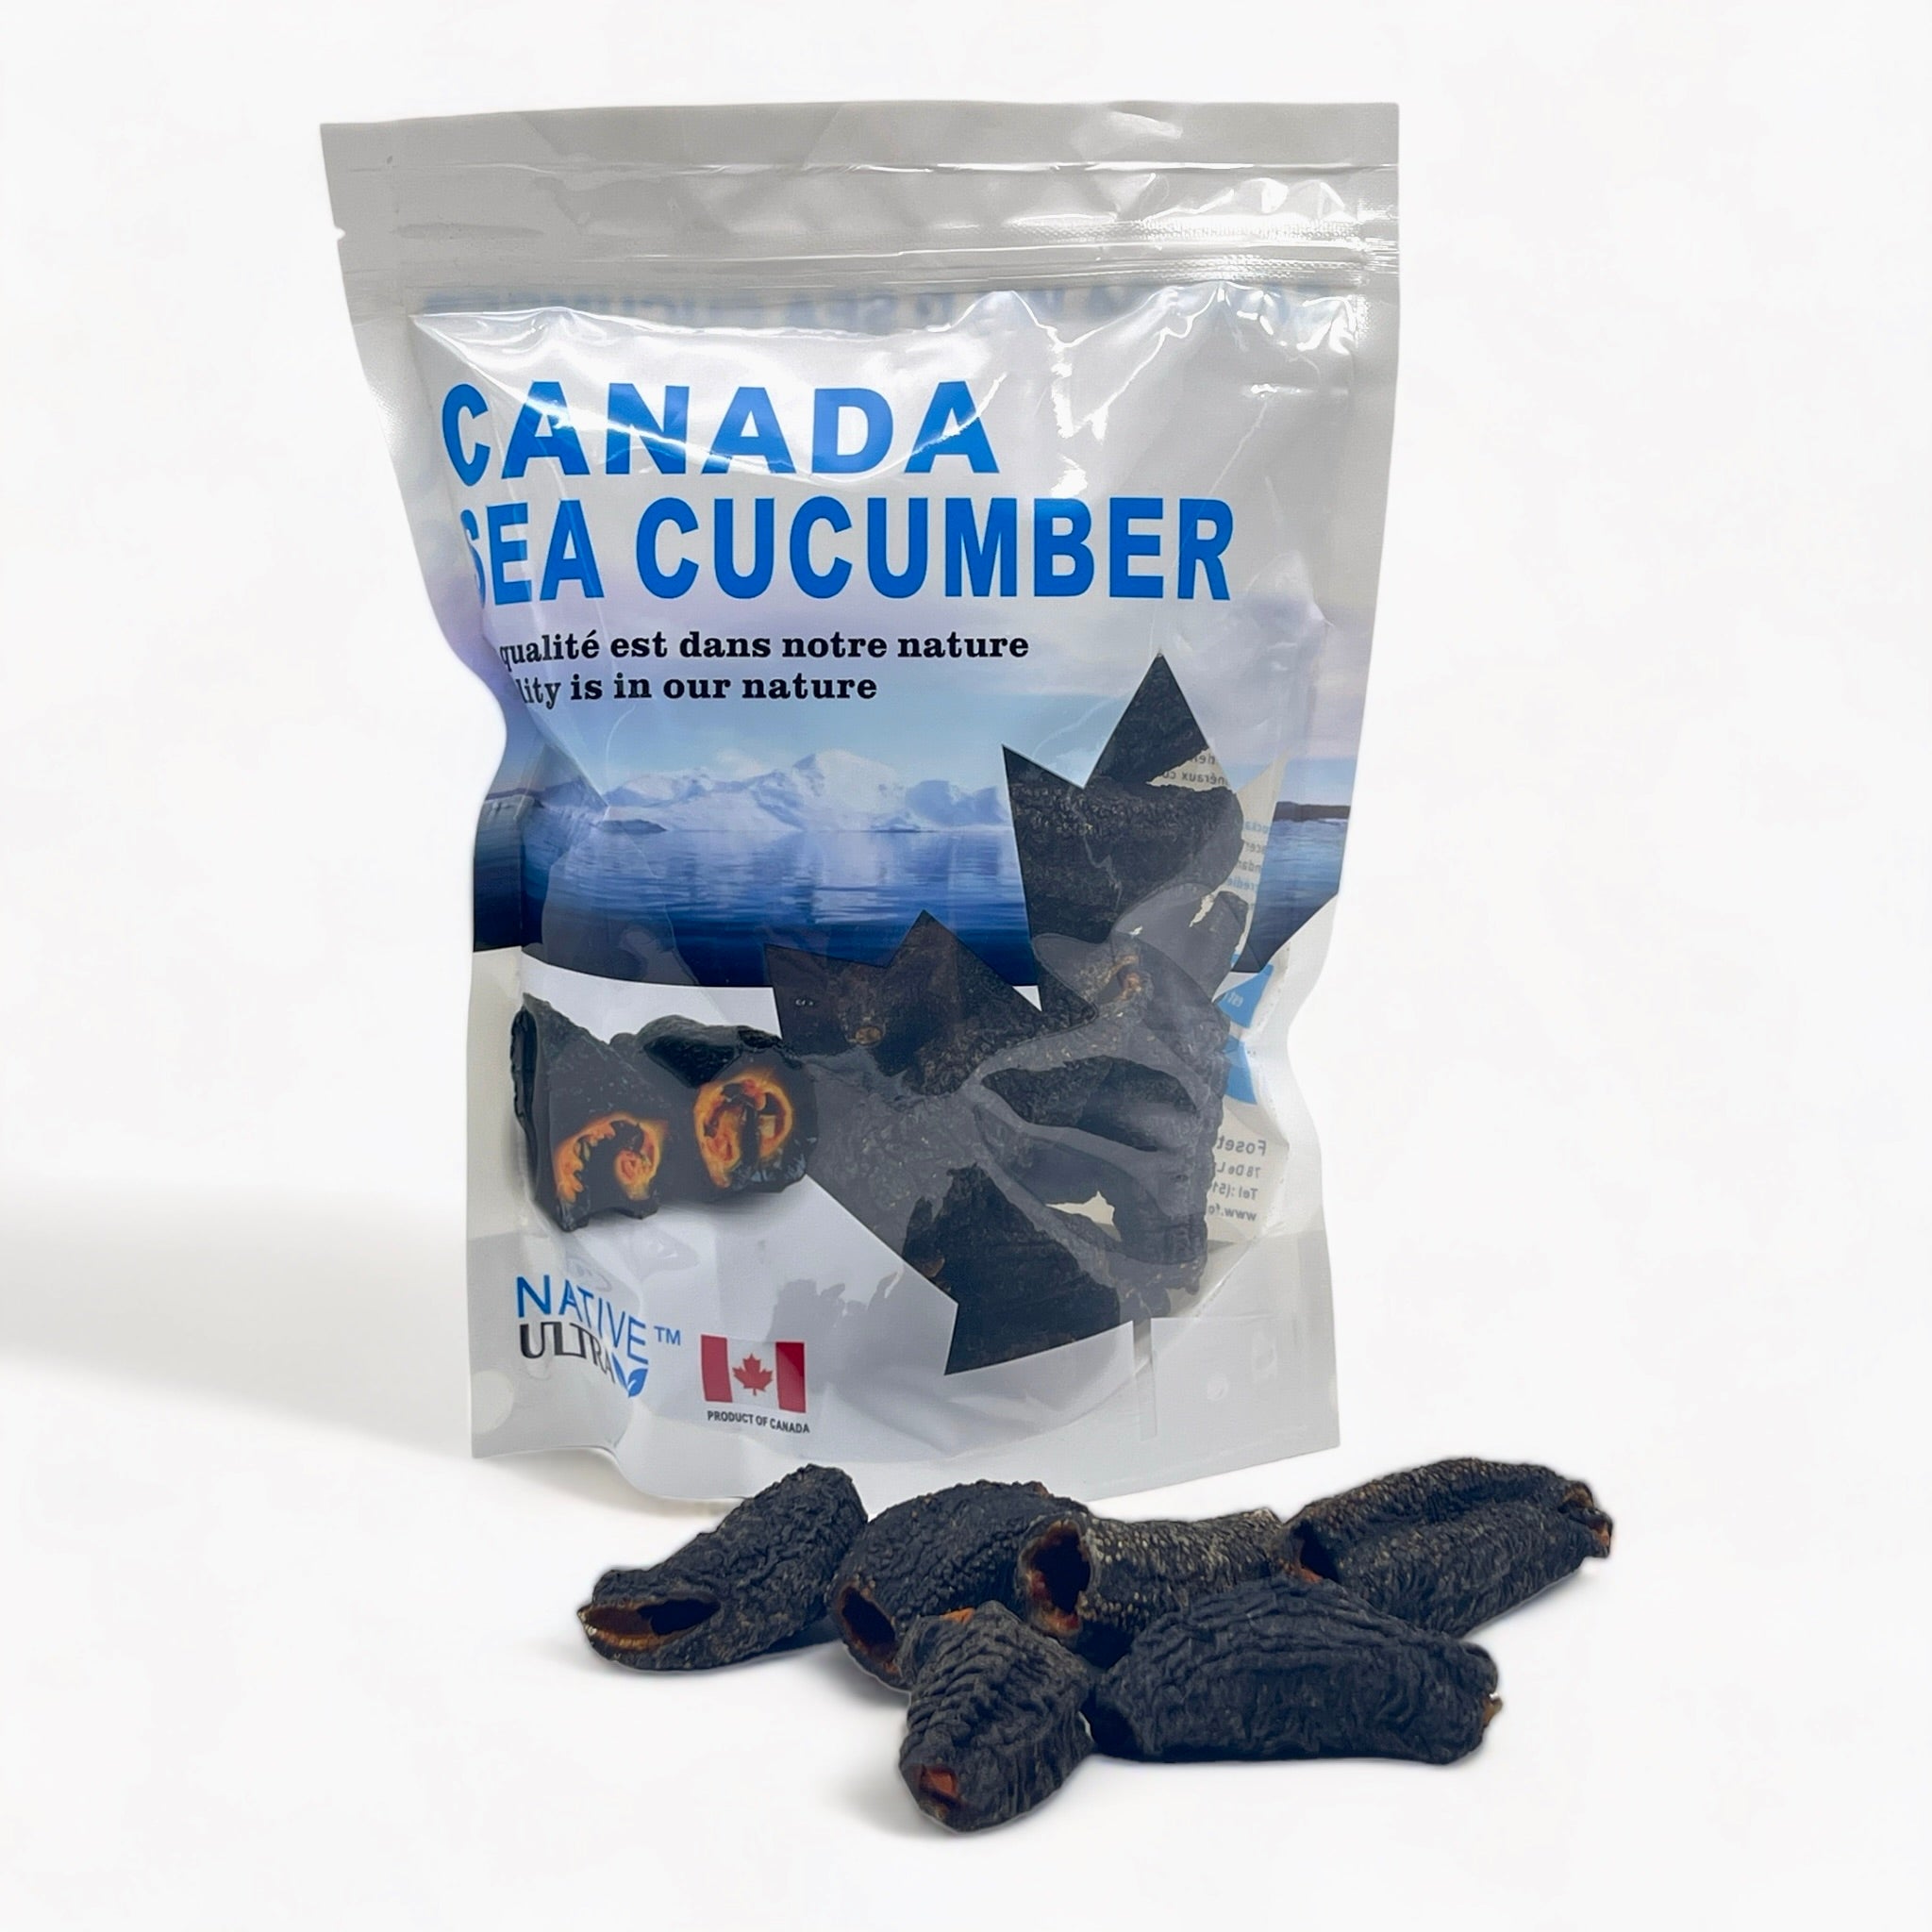 NATIVE ULTRA Canada Wild Sea Cucumber 13-16 pieces, 454g/Bag